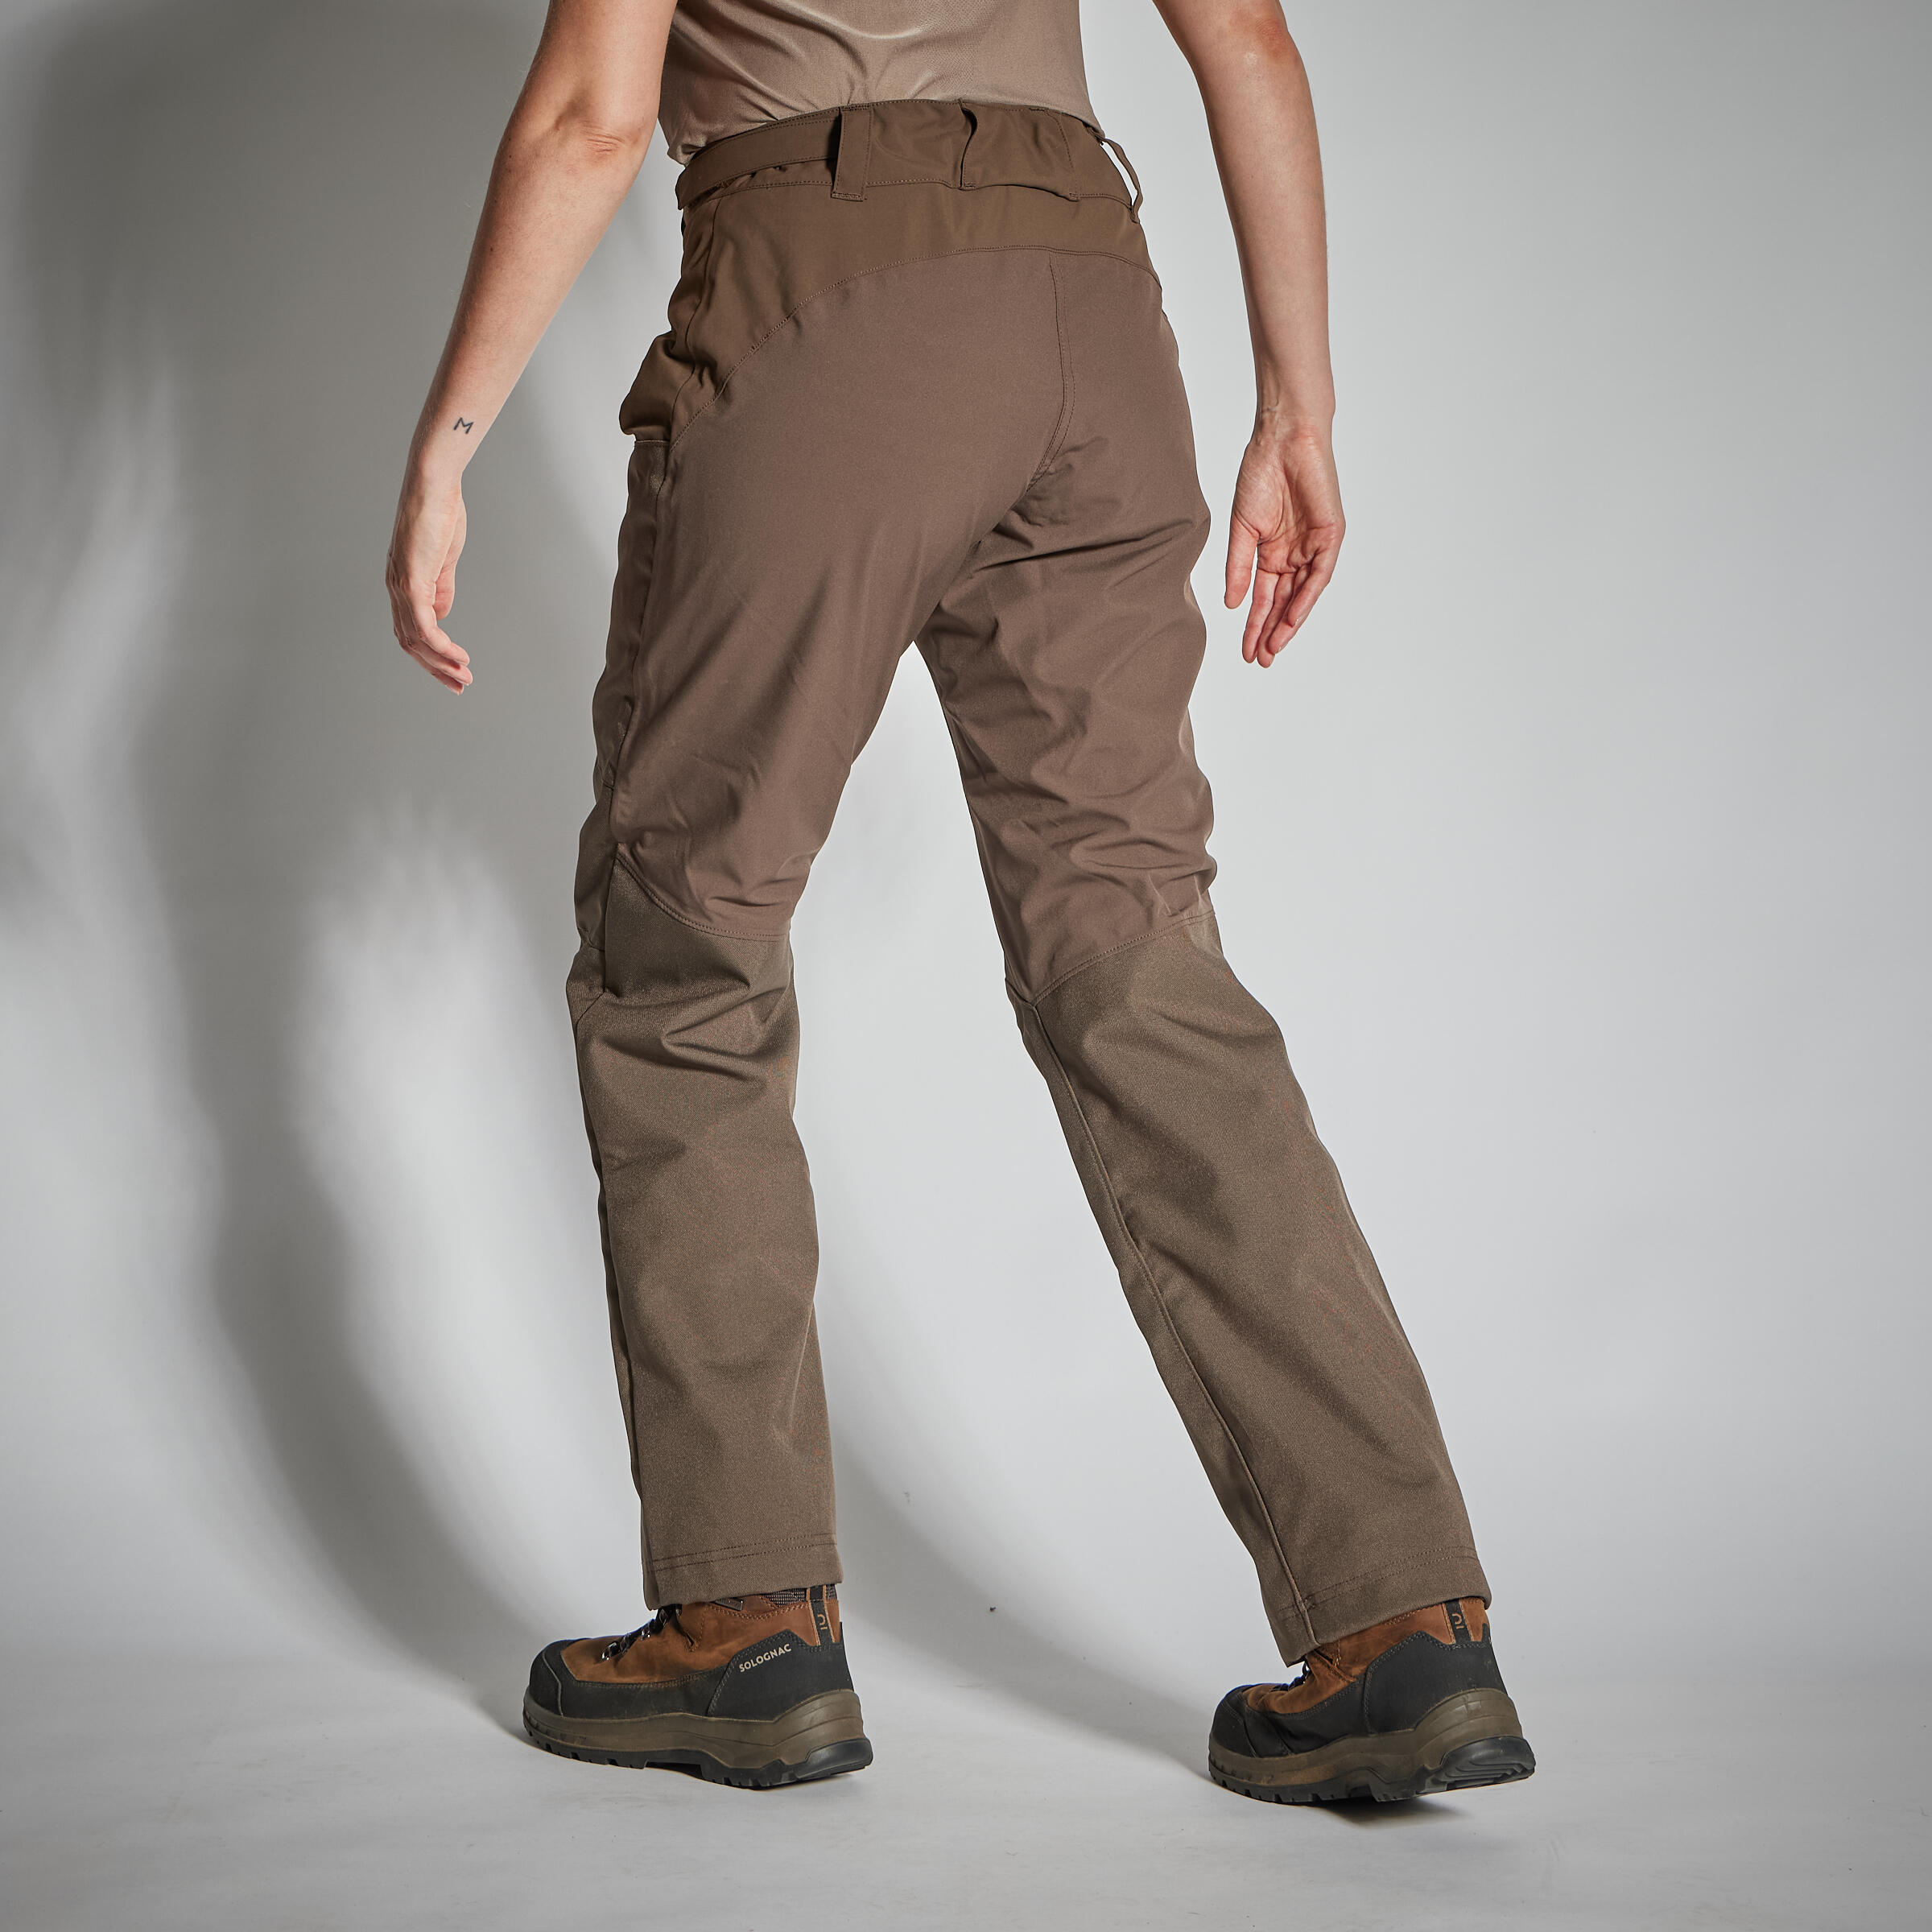 Quechua DECATHLON Men039s Cargo Trousers Hiking Pants Outdoor  eBay